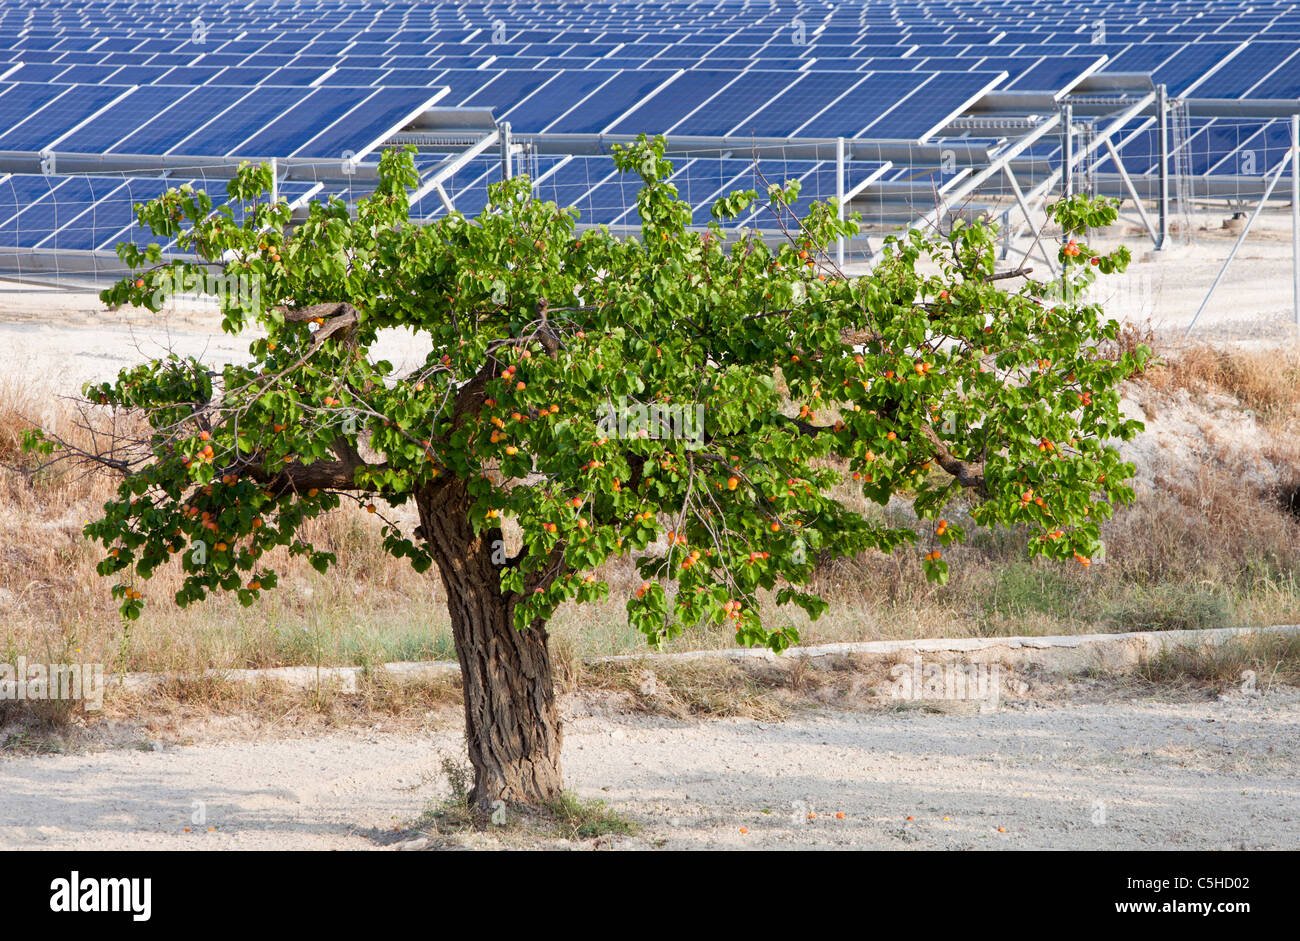 A photo voltaic solar power station near Calasparra, Murcia, Spain and a peach orchard. Stock Photo